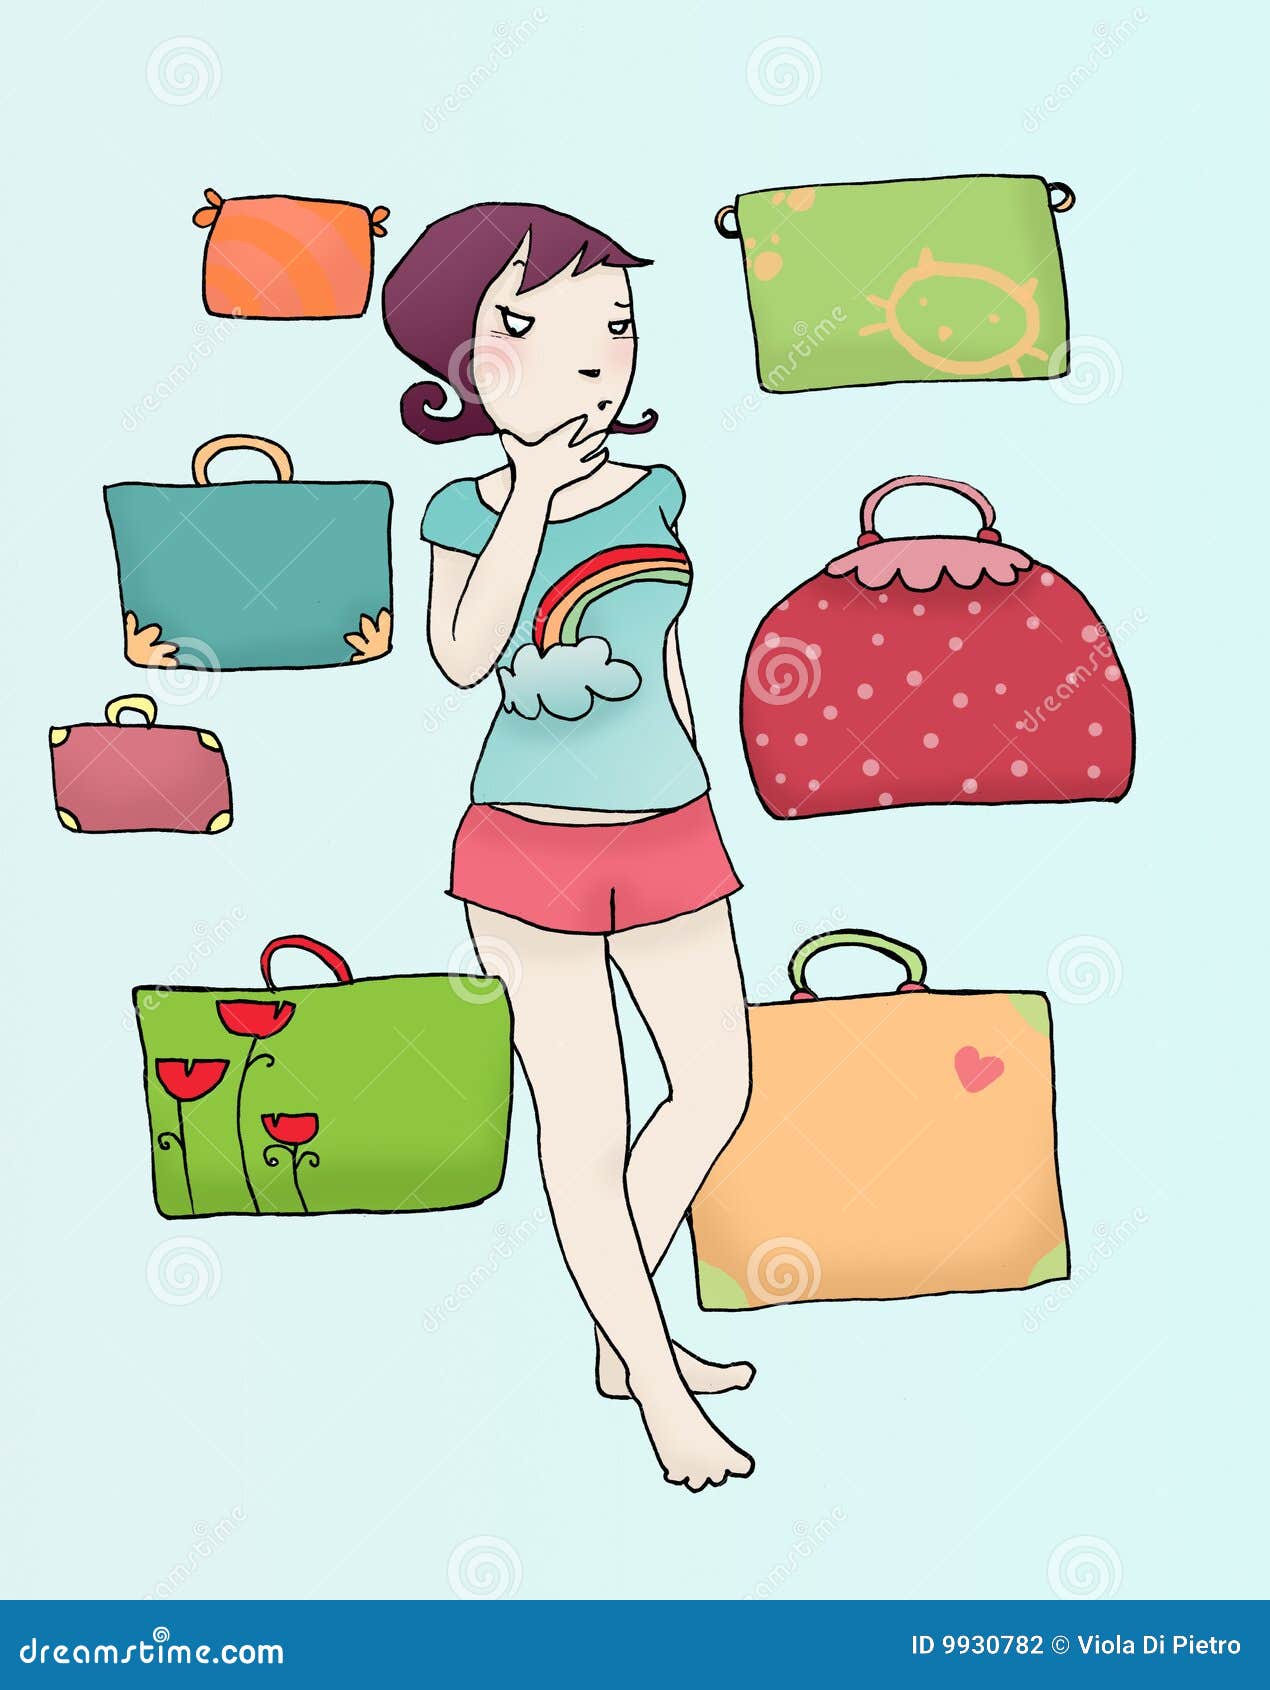 Illustration Of A Travel Bag Traveling On A Rainbow Illustration